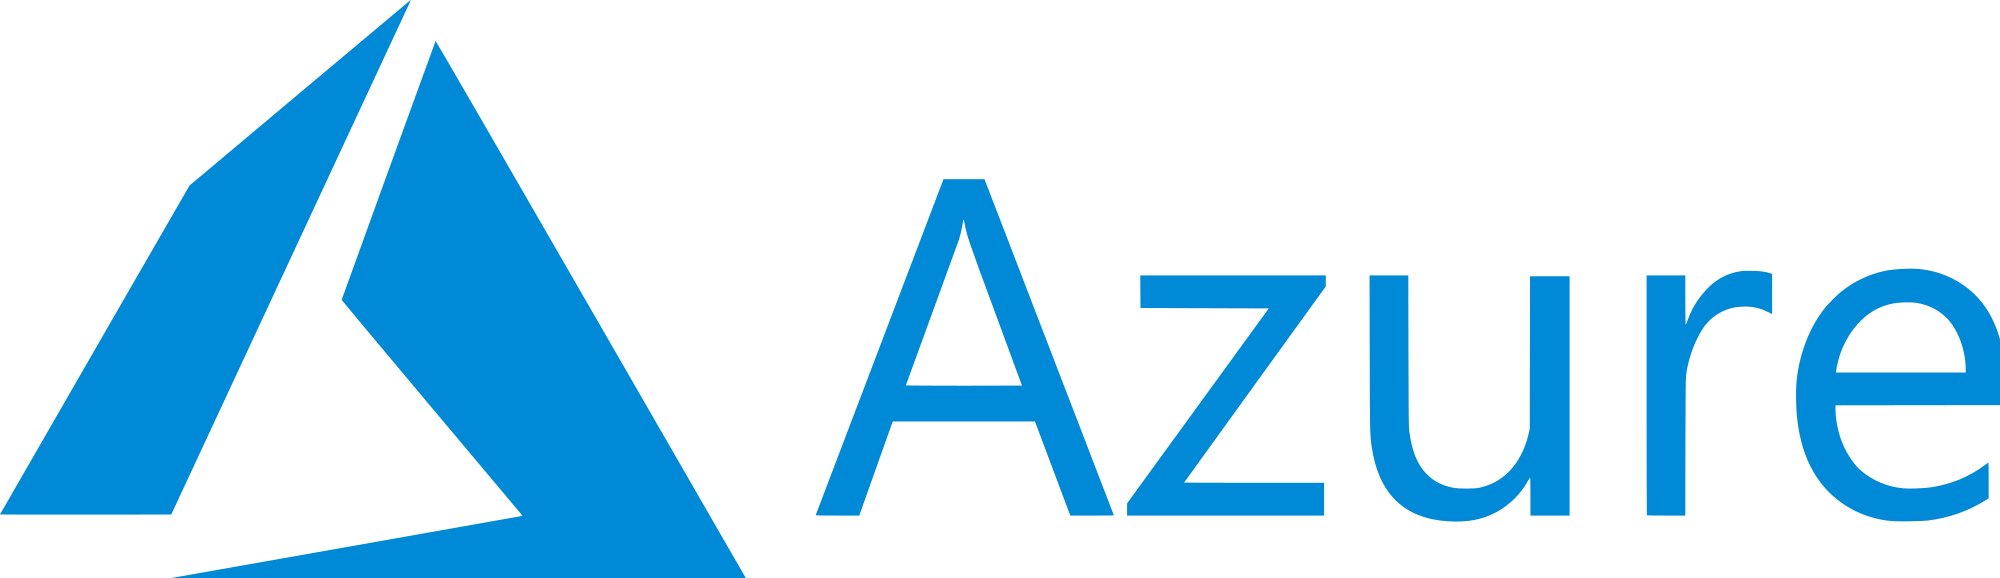 Microsoft Azure Logo - File:Microsoft Azure Logo.svg - Wikimedia Commons